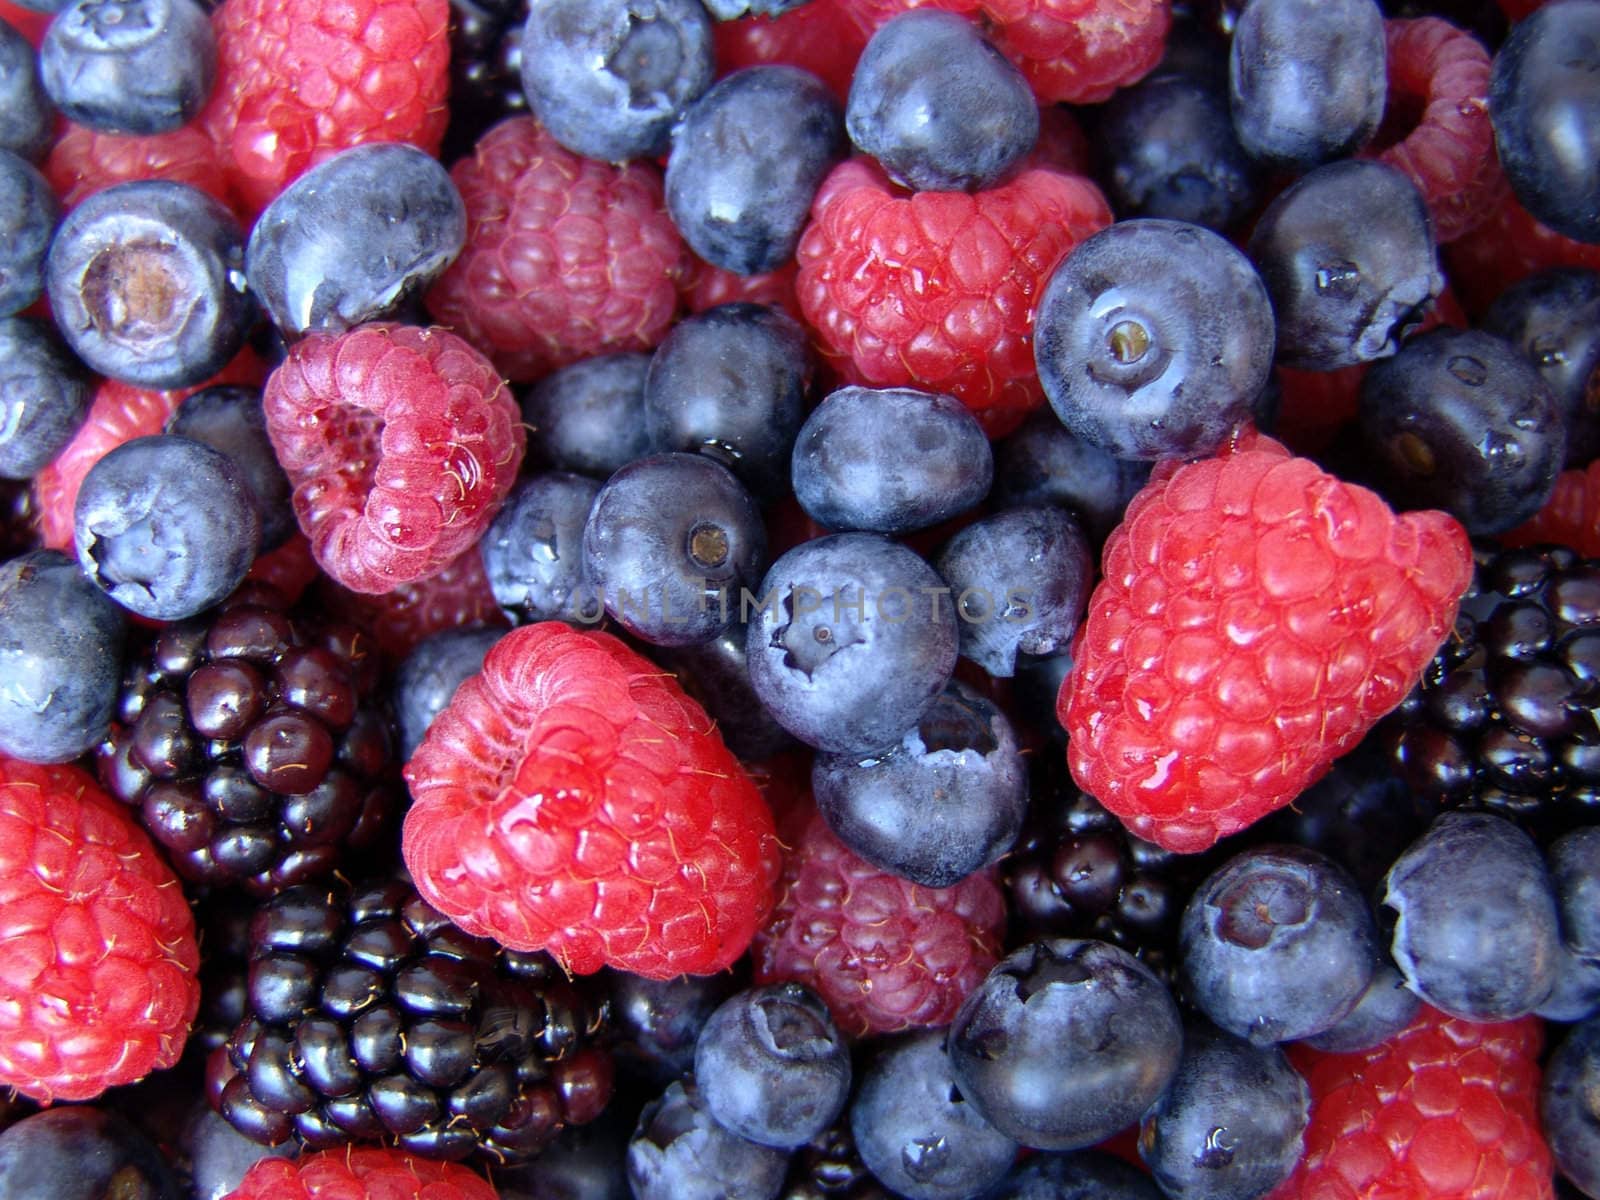 Mixed Berries by raliand